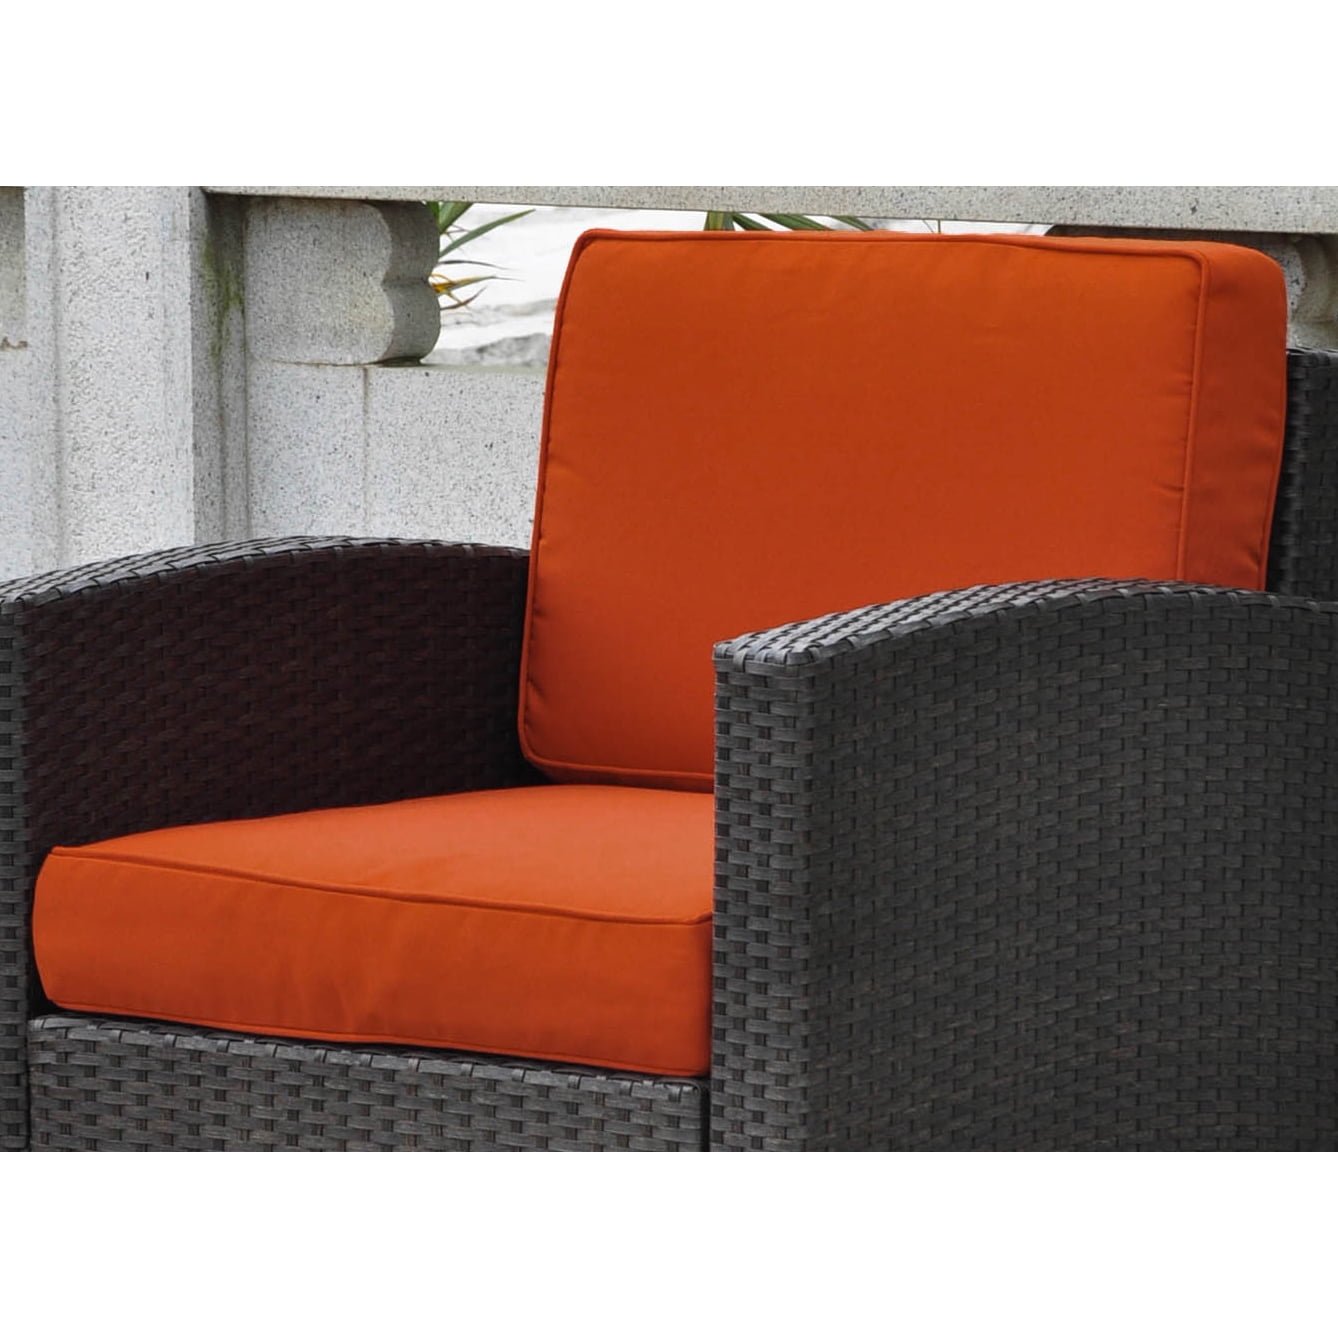 International Caravan Barcelona Corded Replacement Cushions Only For Barcelona Chair Ici 4250 1ch Set Of 2 Walmart Com Walmart Com